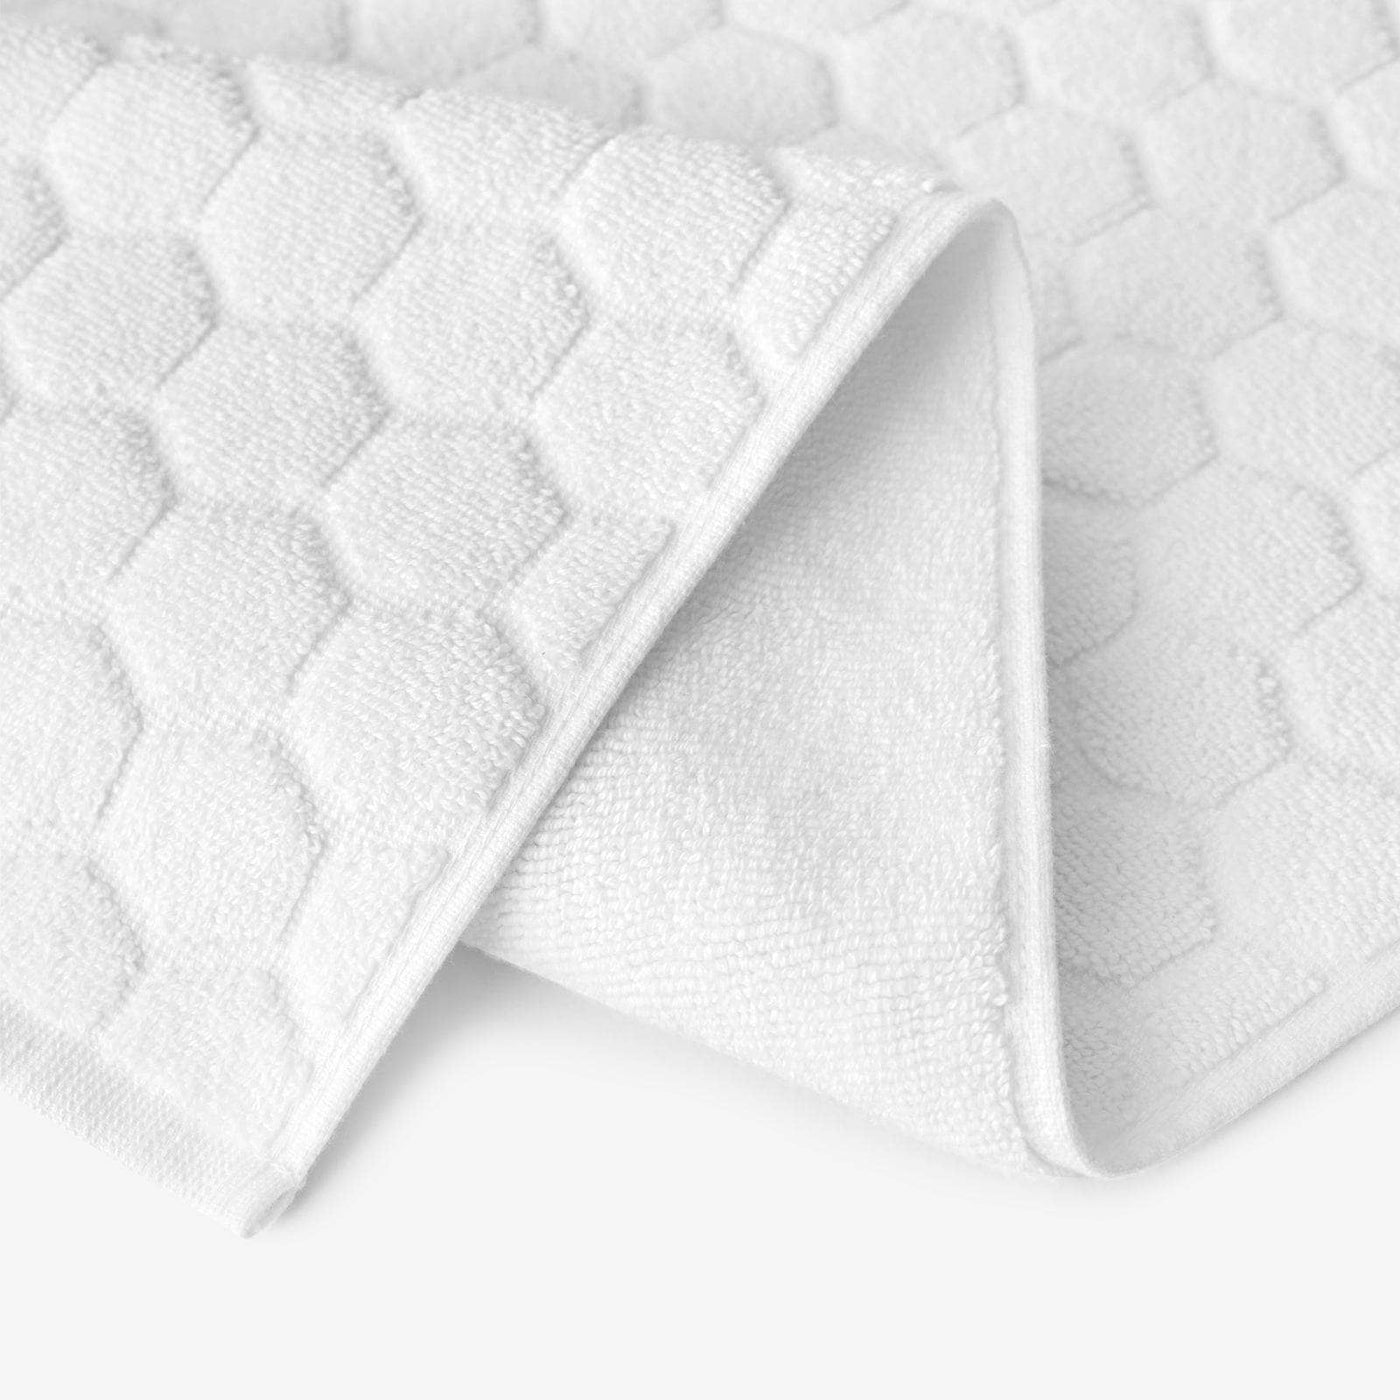 Gary Textured 100% Turkish Cotton Bath Mat, White, 50x80 cm Bath Mats sazy.com